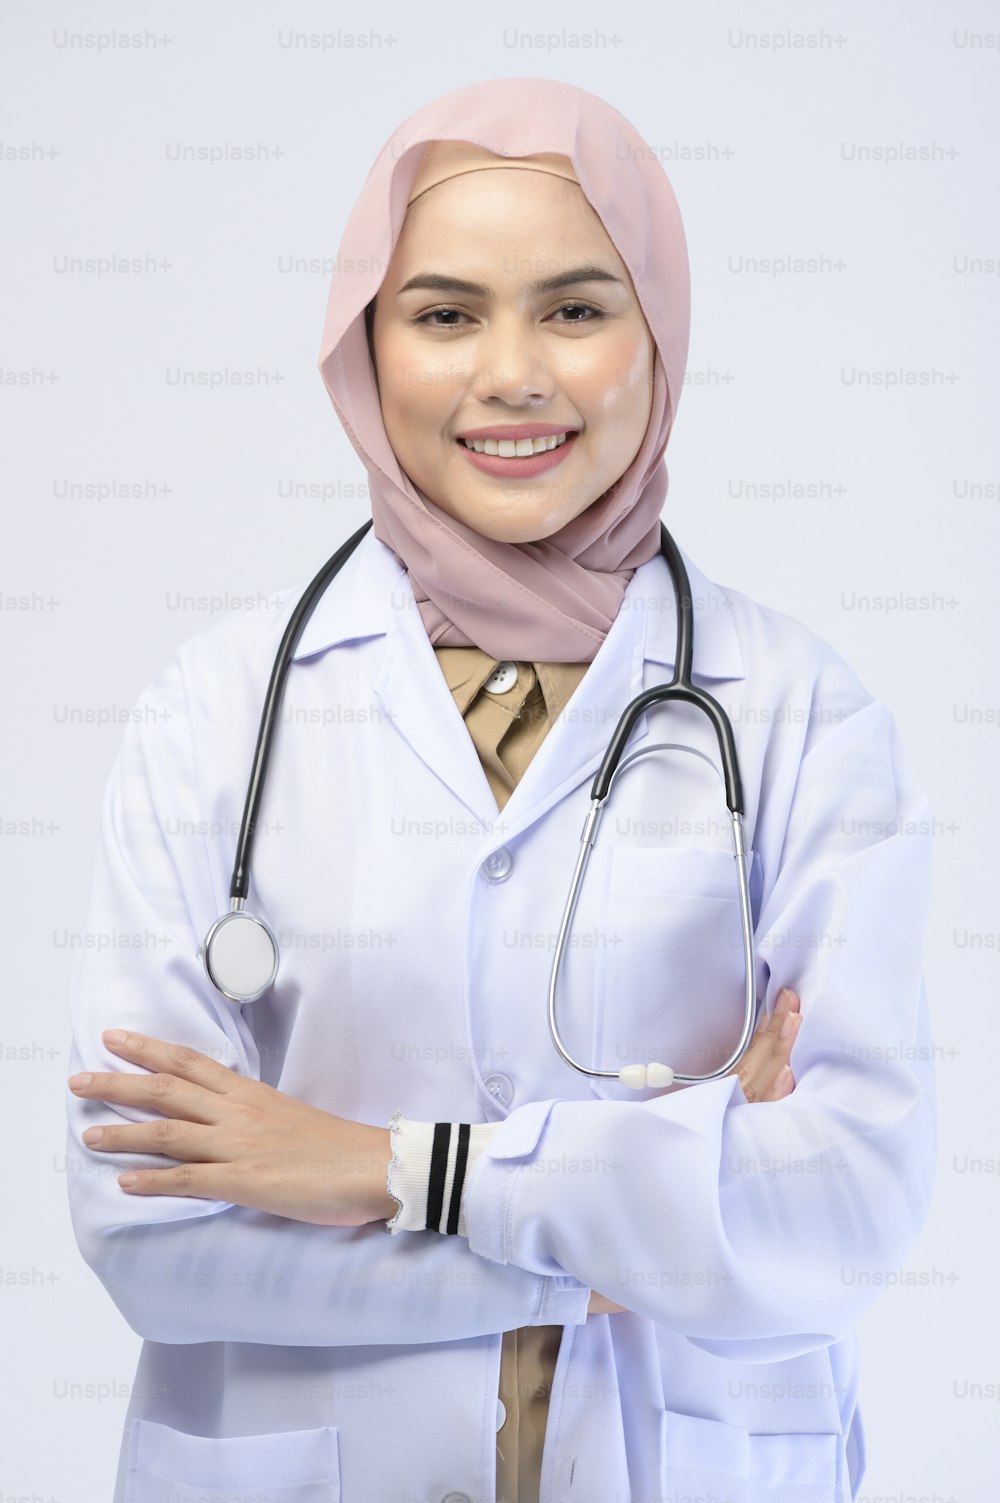 Una dottoressa musulmana con hijab su sfondo bianco studio.